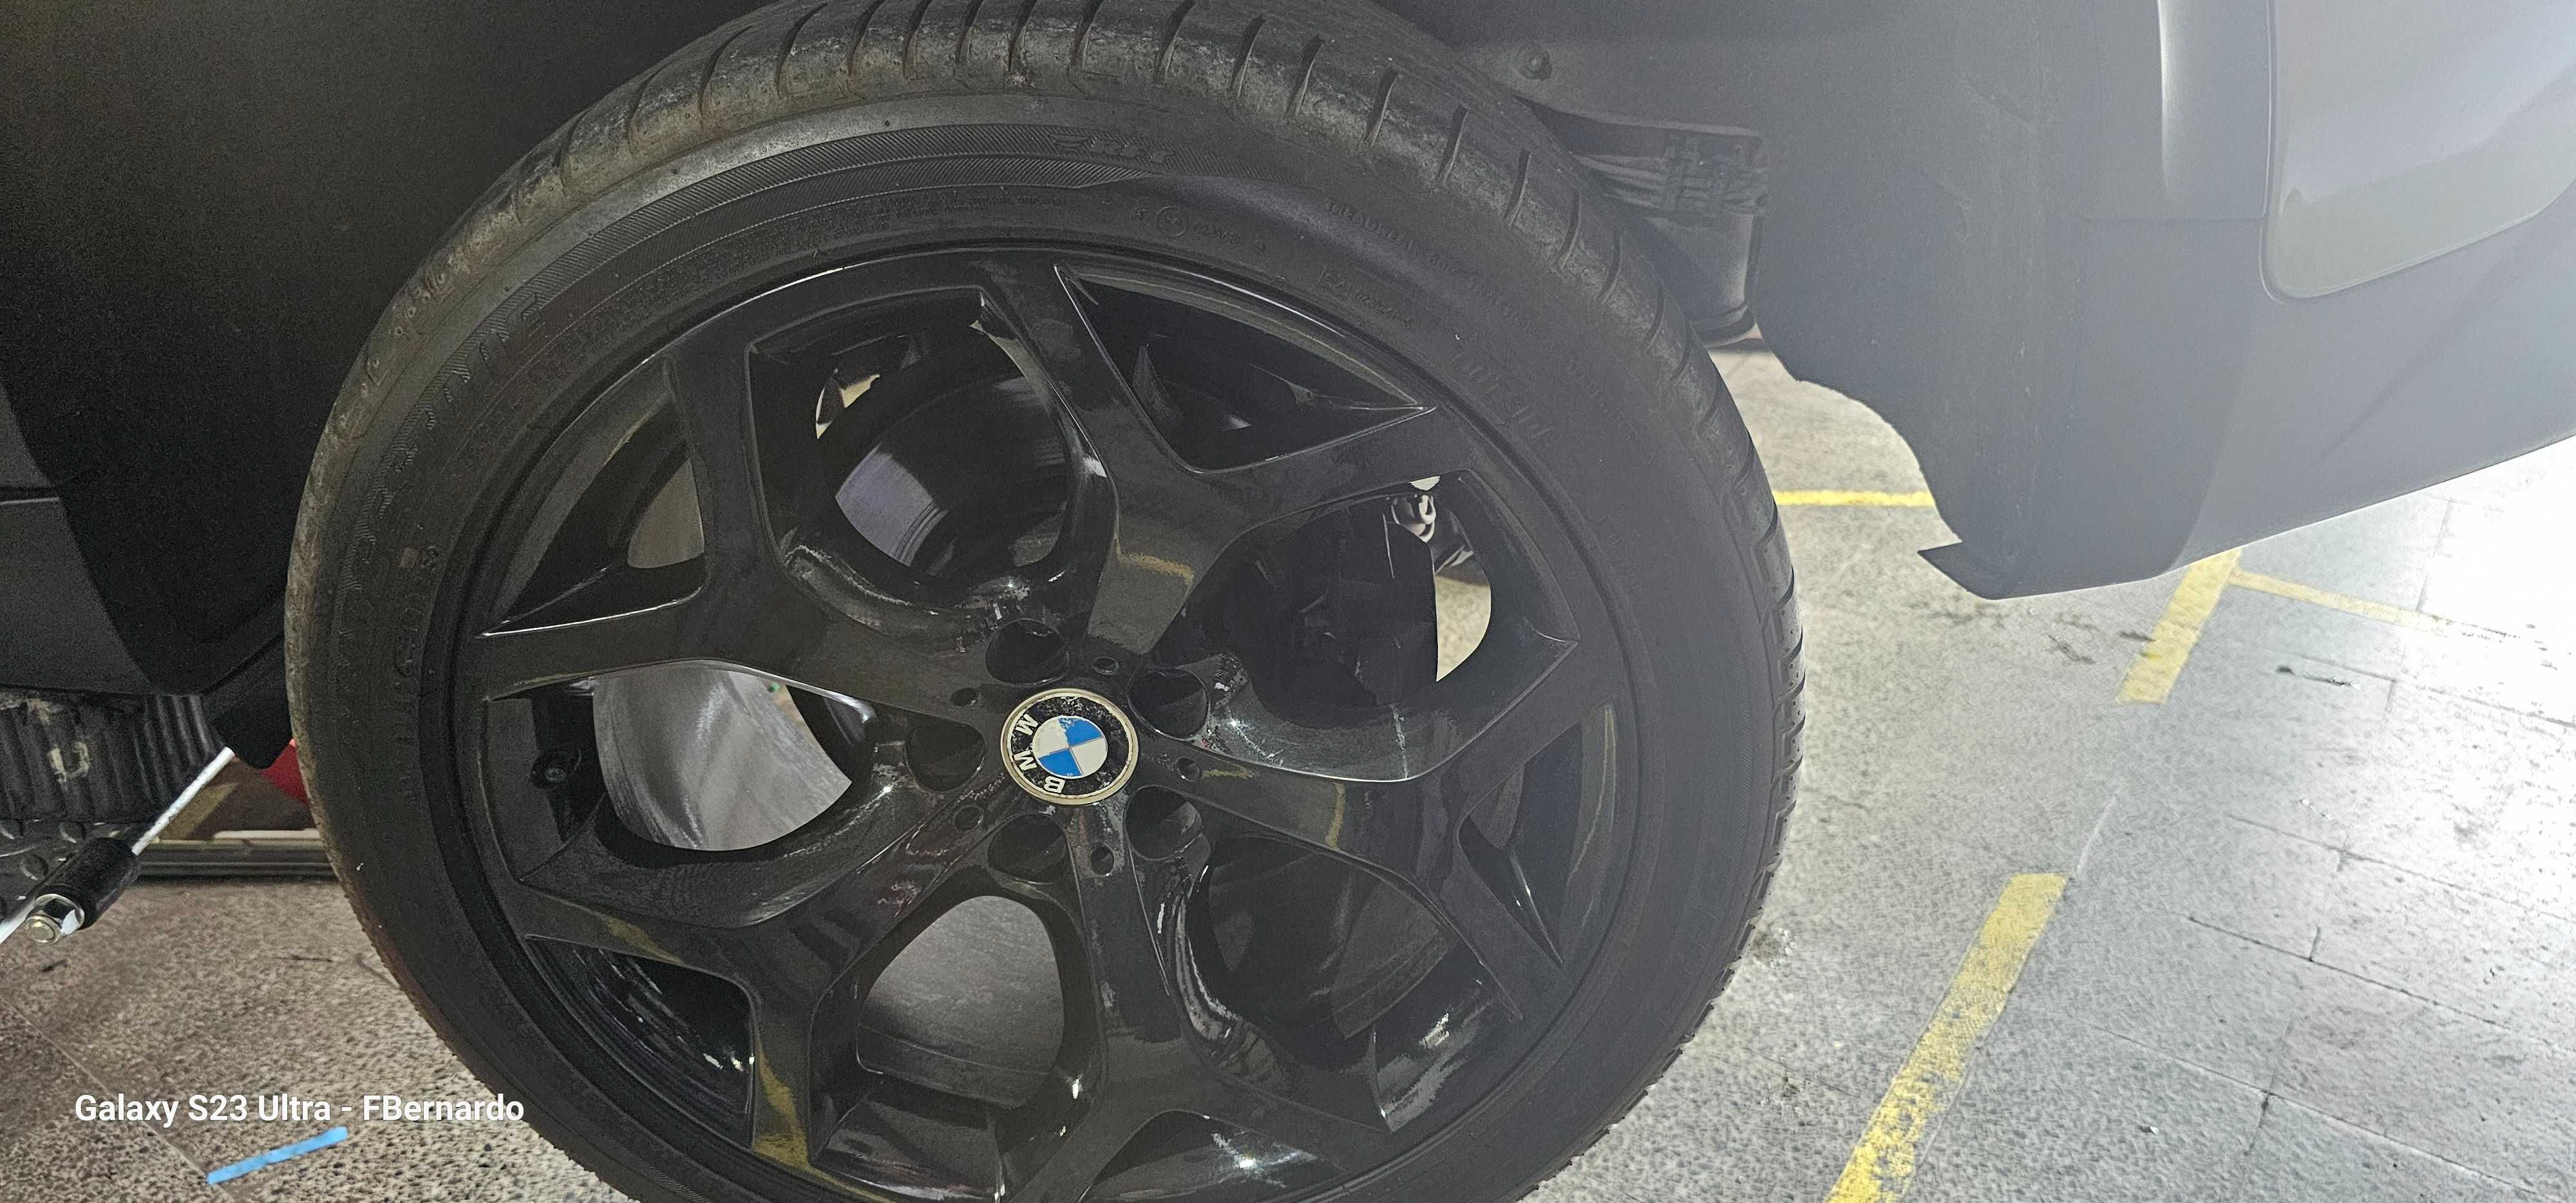 - Oportunidade; 4 Jantes BMW X5 Ronal 20' c/ pneus Ran Flat Firestone.